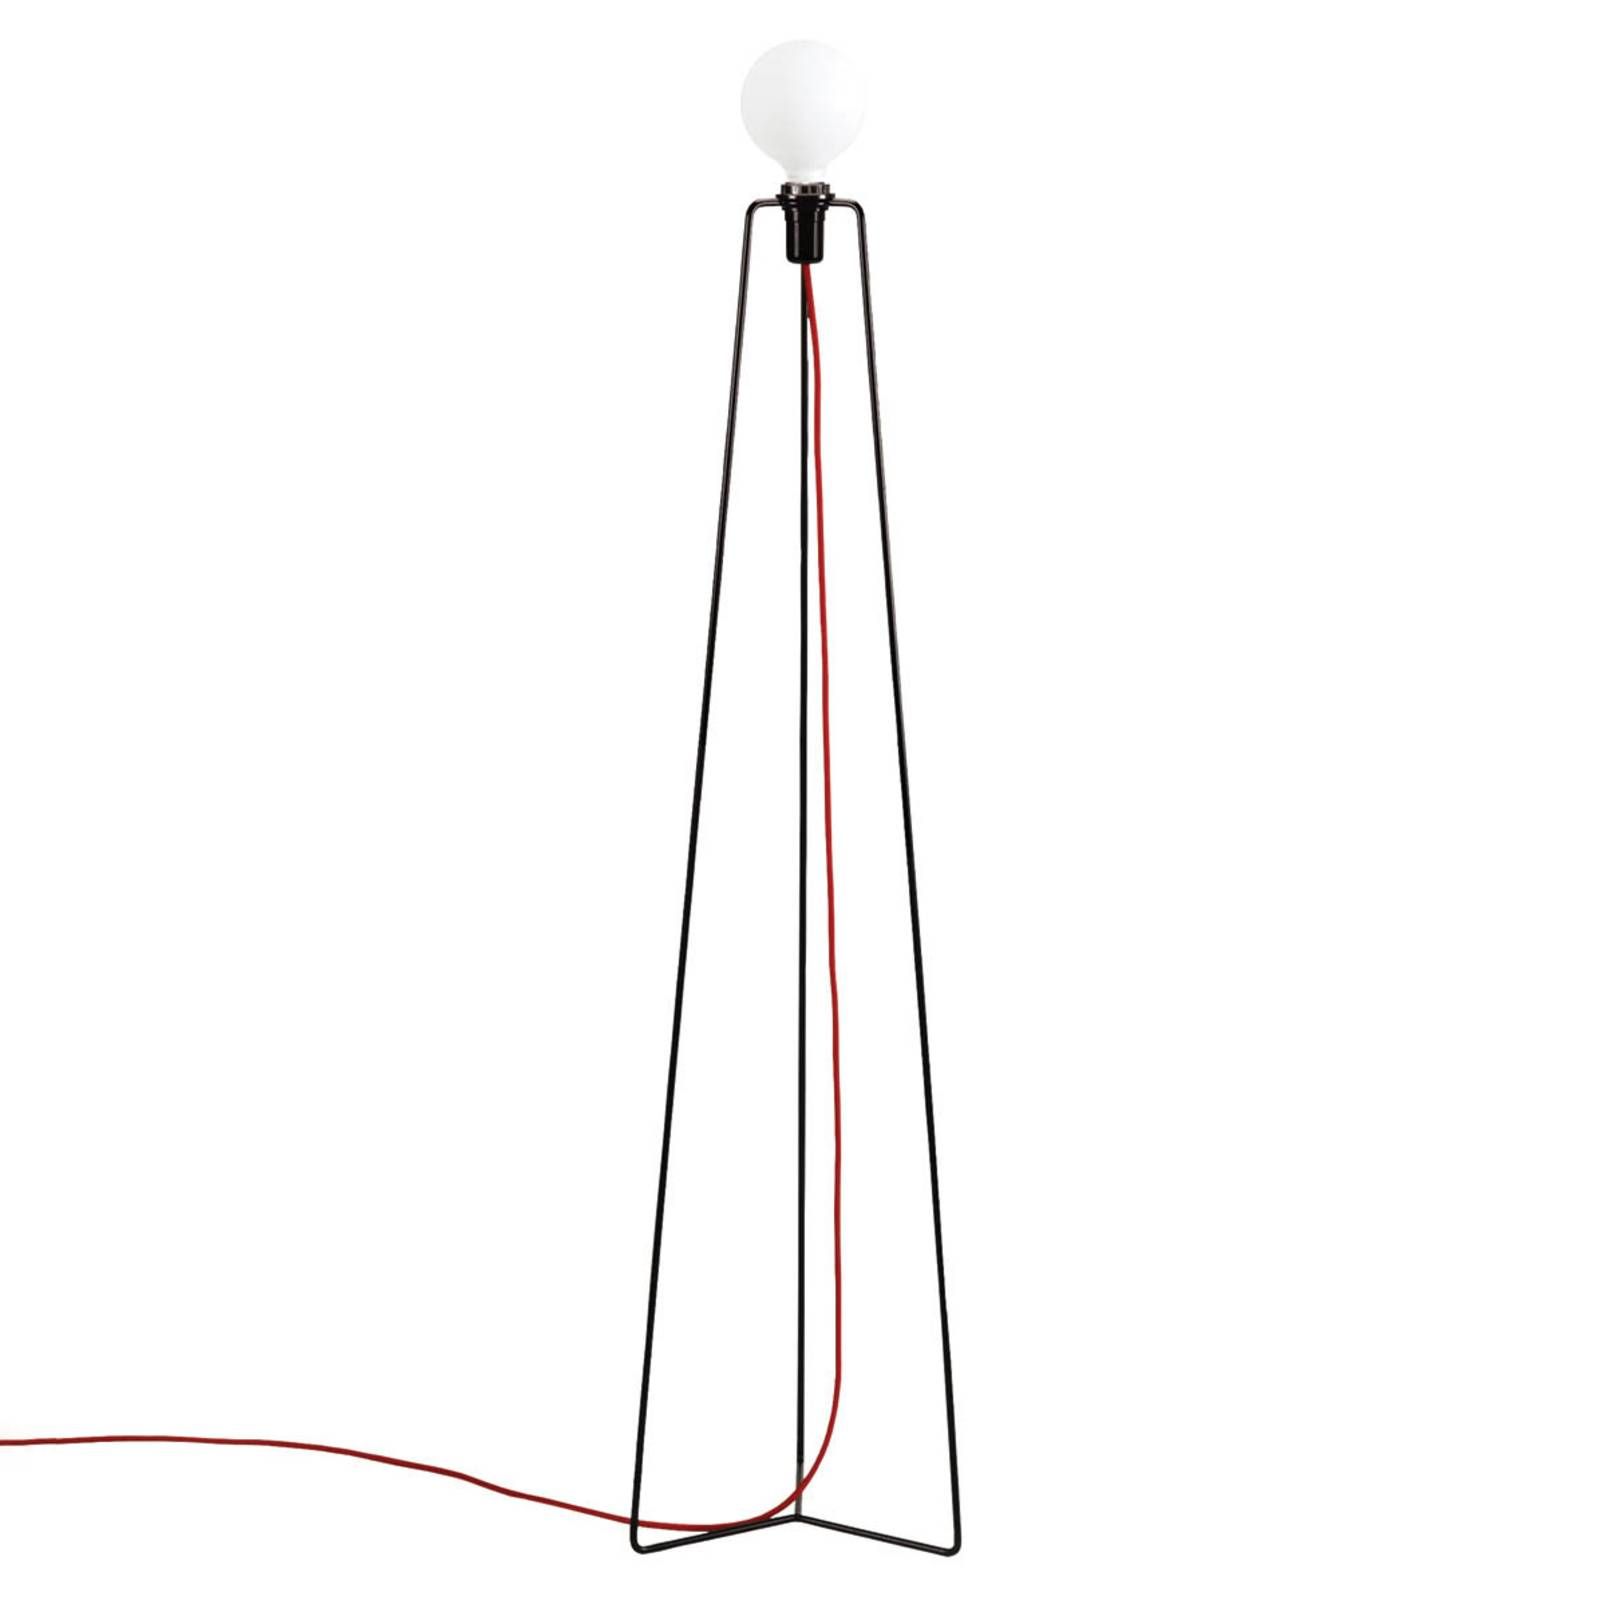 GRUPA Model M3 LED lampa čierna, kábel červená, Obývacia izba / jedáleň, oceľ, sklo, E14, 4W, P: 31 cm, L: 27 cm, K: 147cm